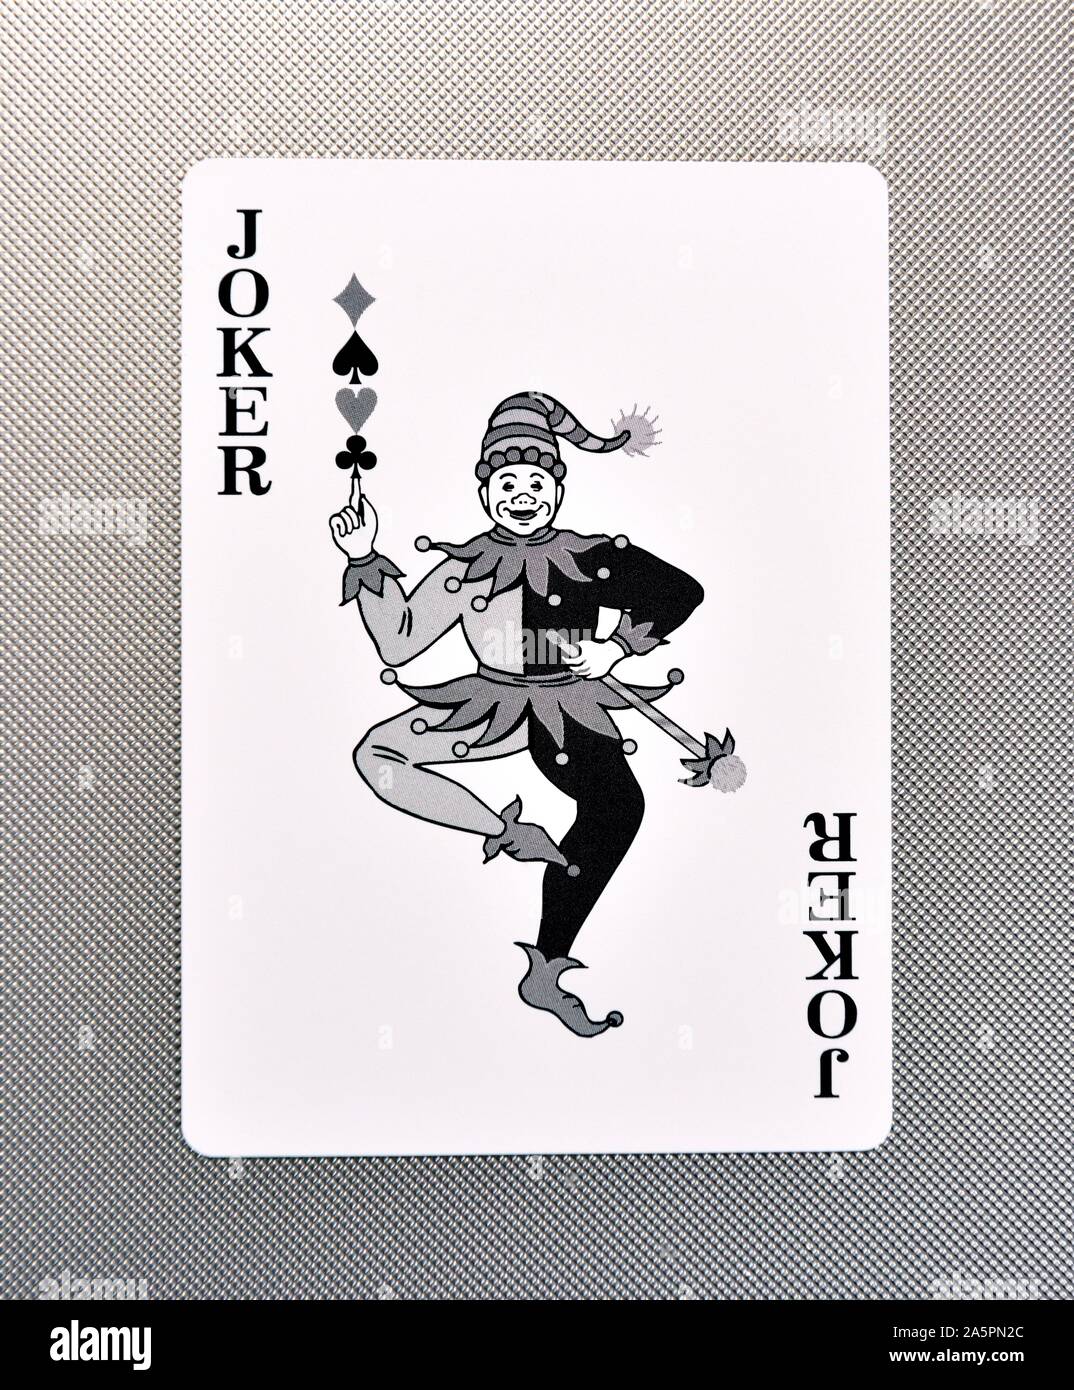 Joker Card,playing card Stock Photo - Alamy